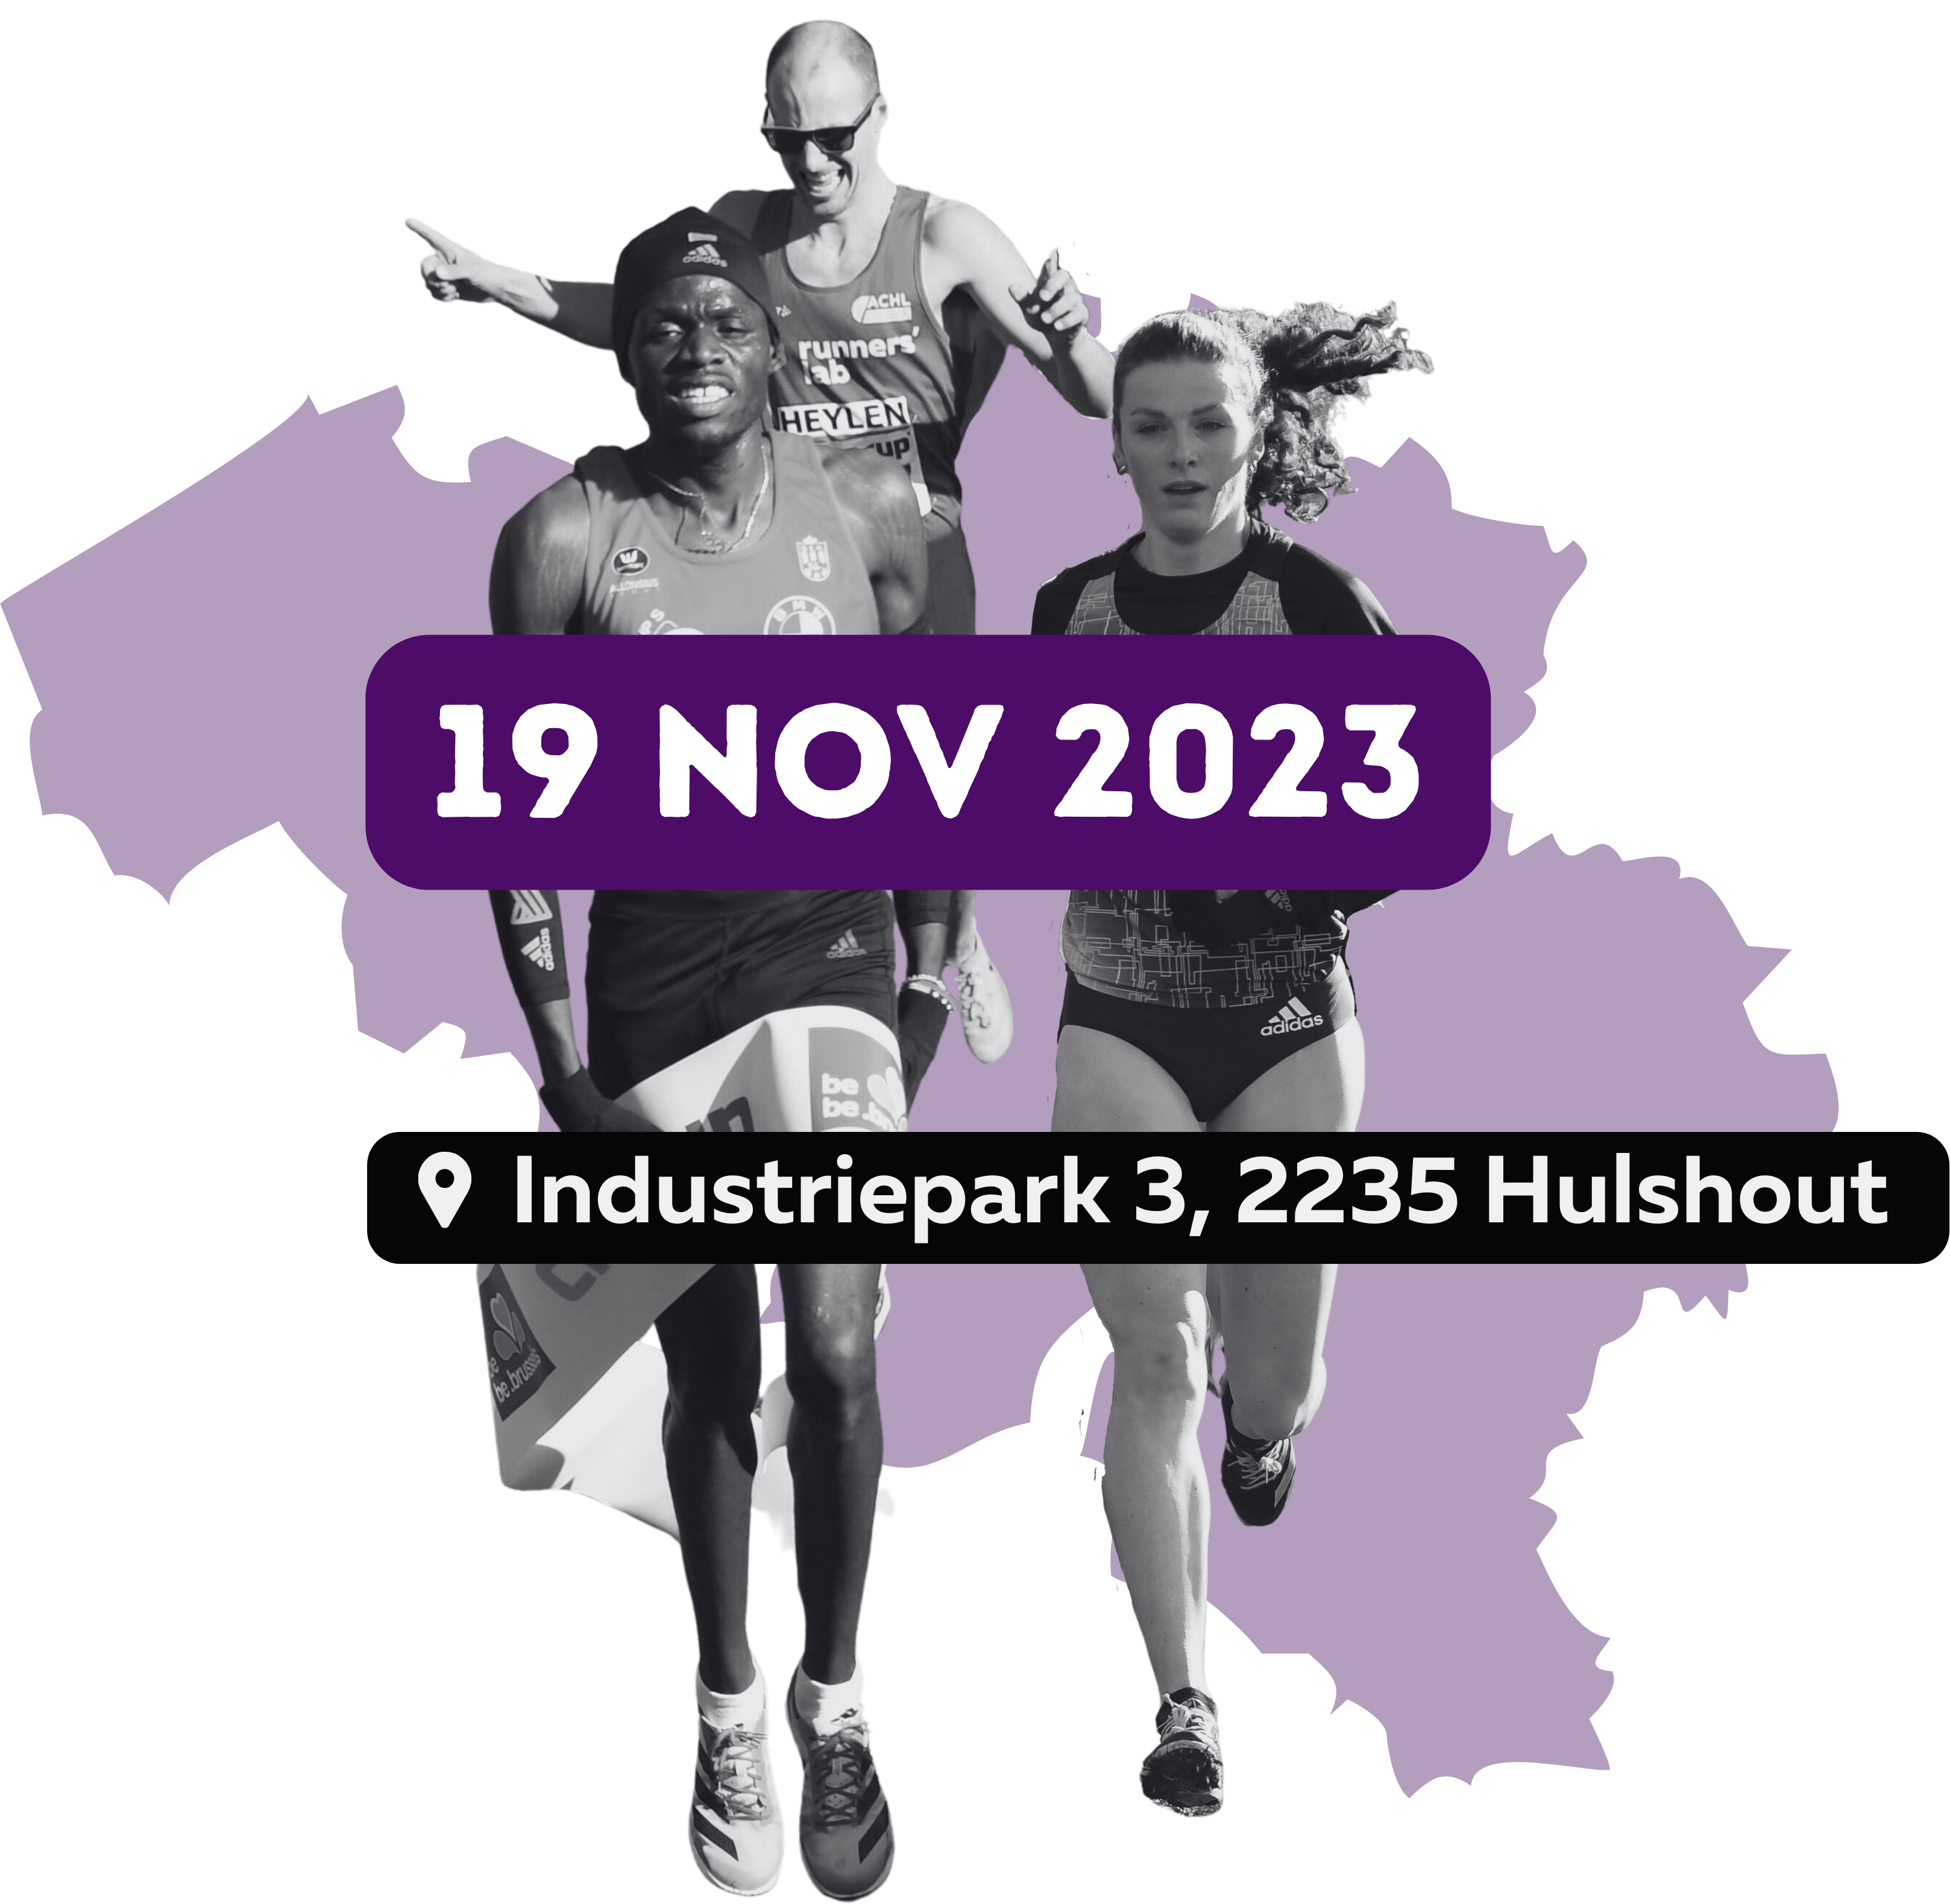 19 november 2023, Industriepark 3, 2235 Hulshout